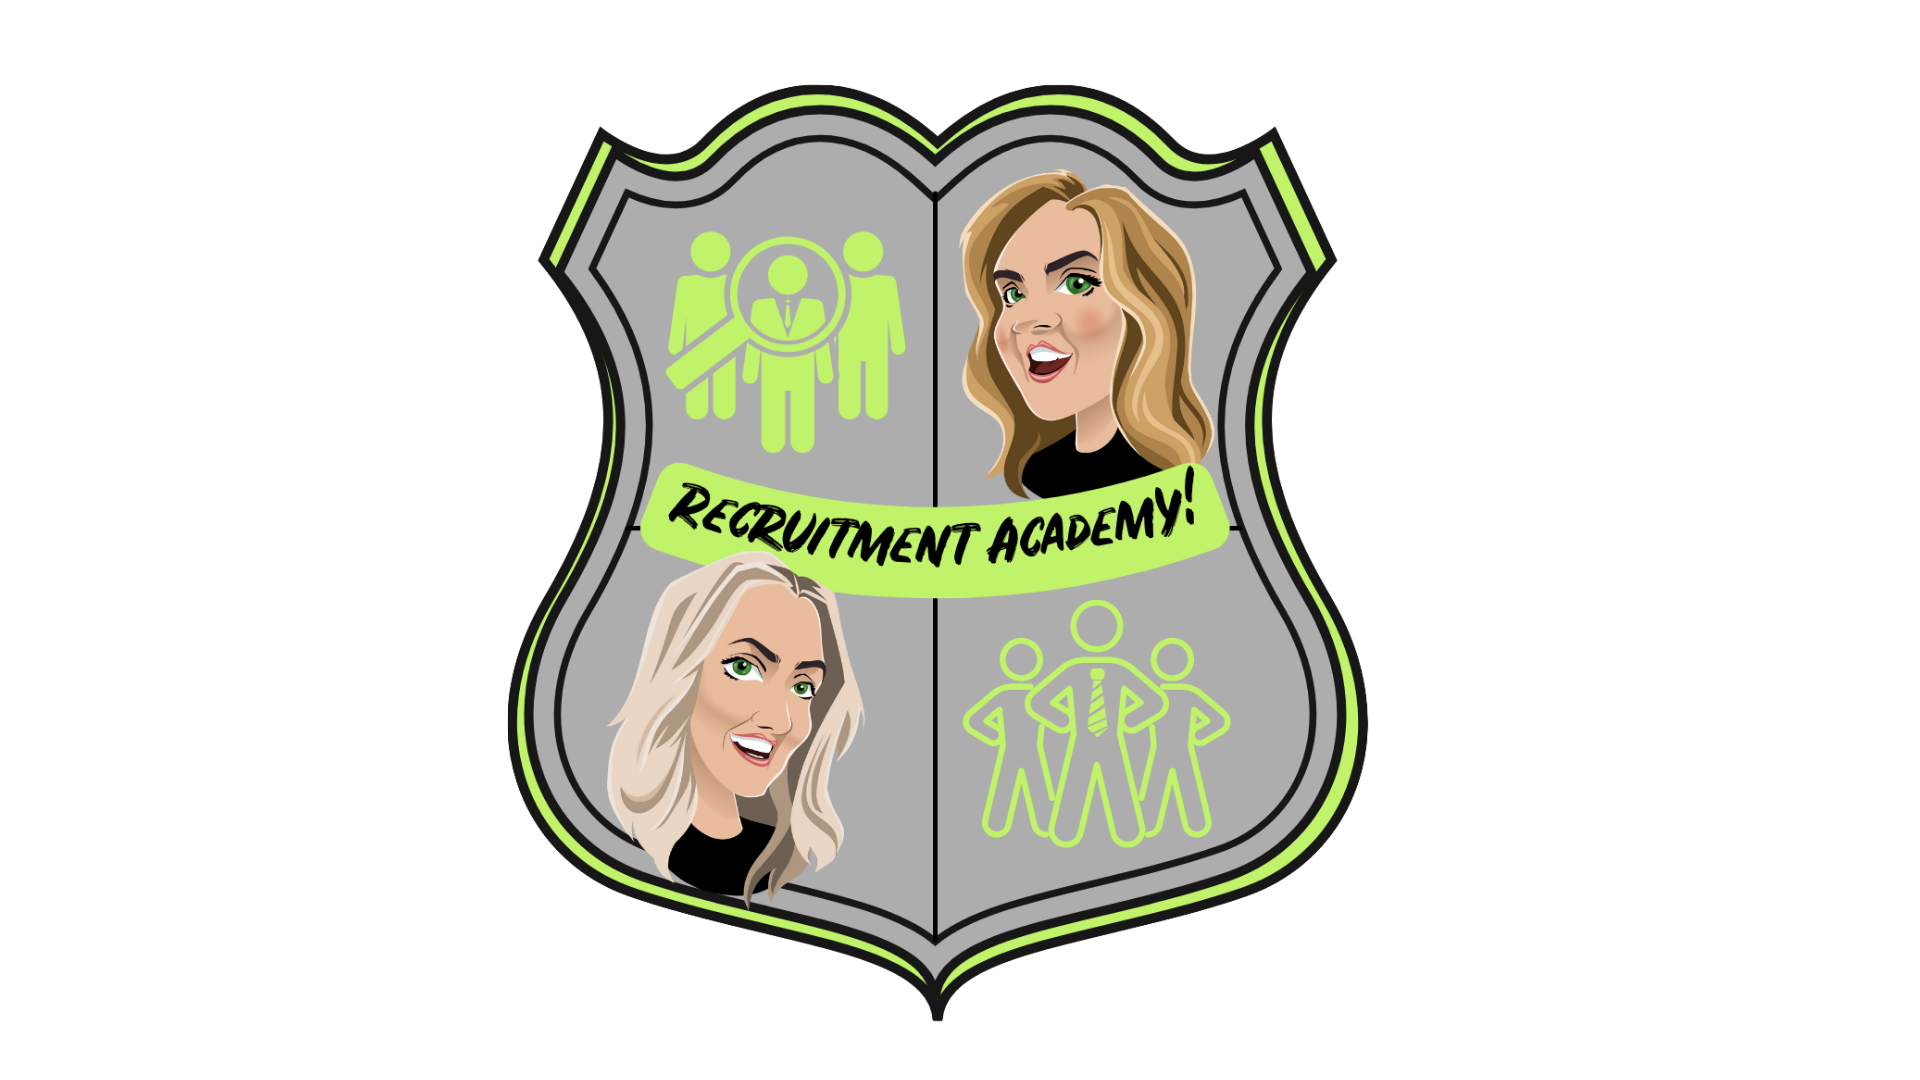 The Recruitment Academy! 